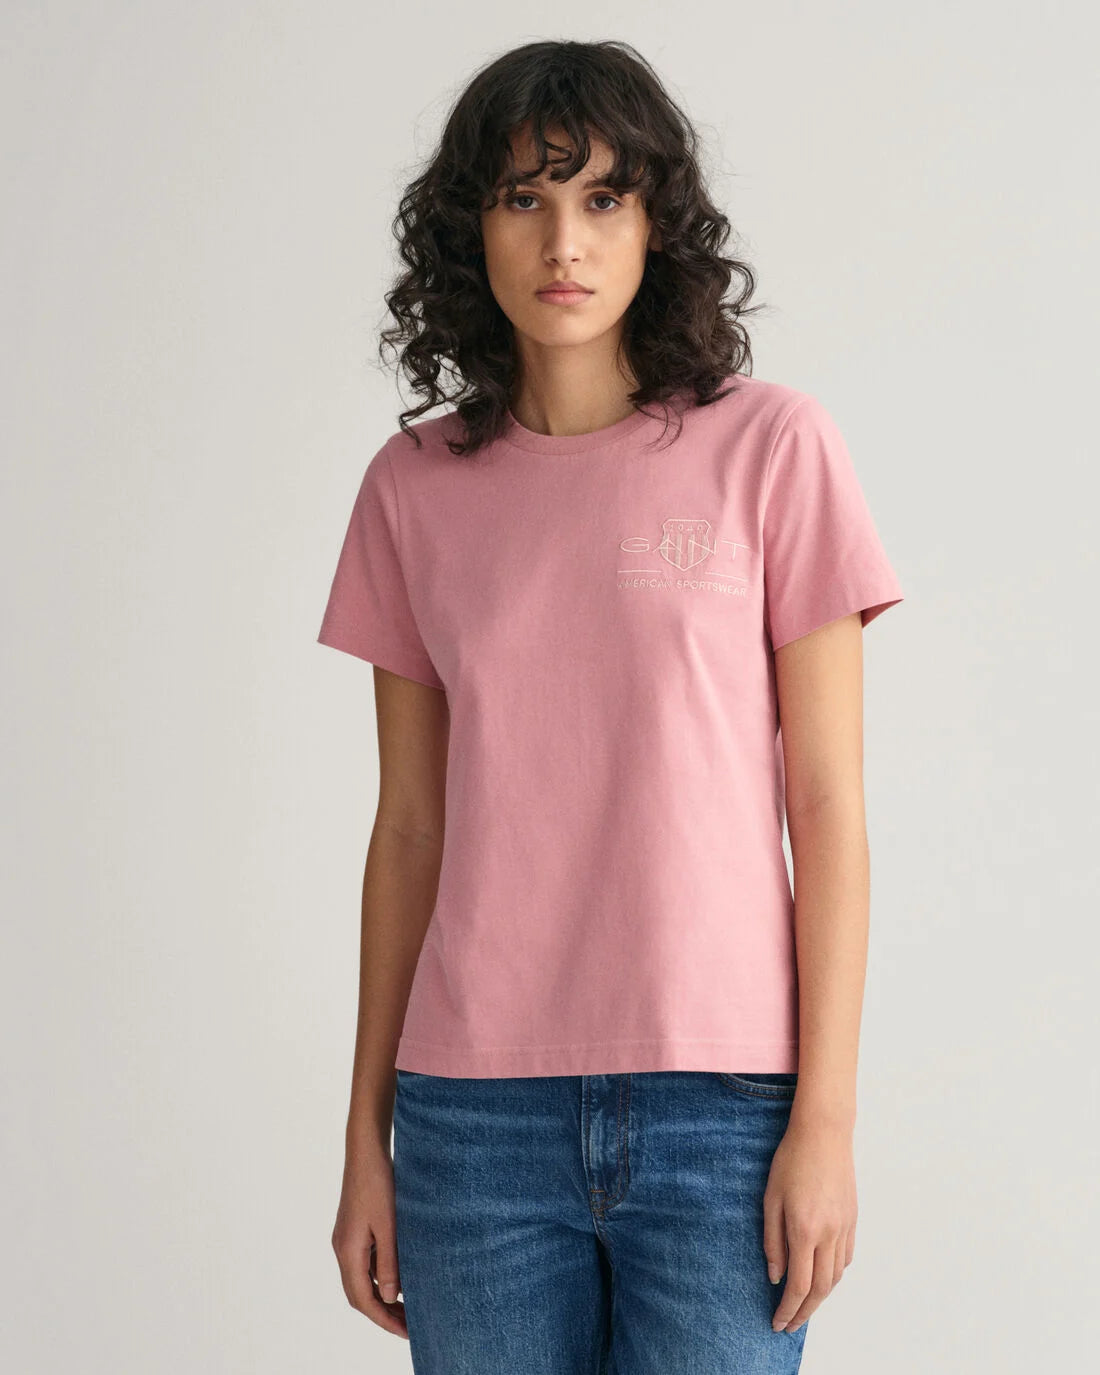 Tonal Archive Shield T-Shirt - Faded Pink Melange